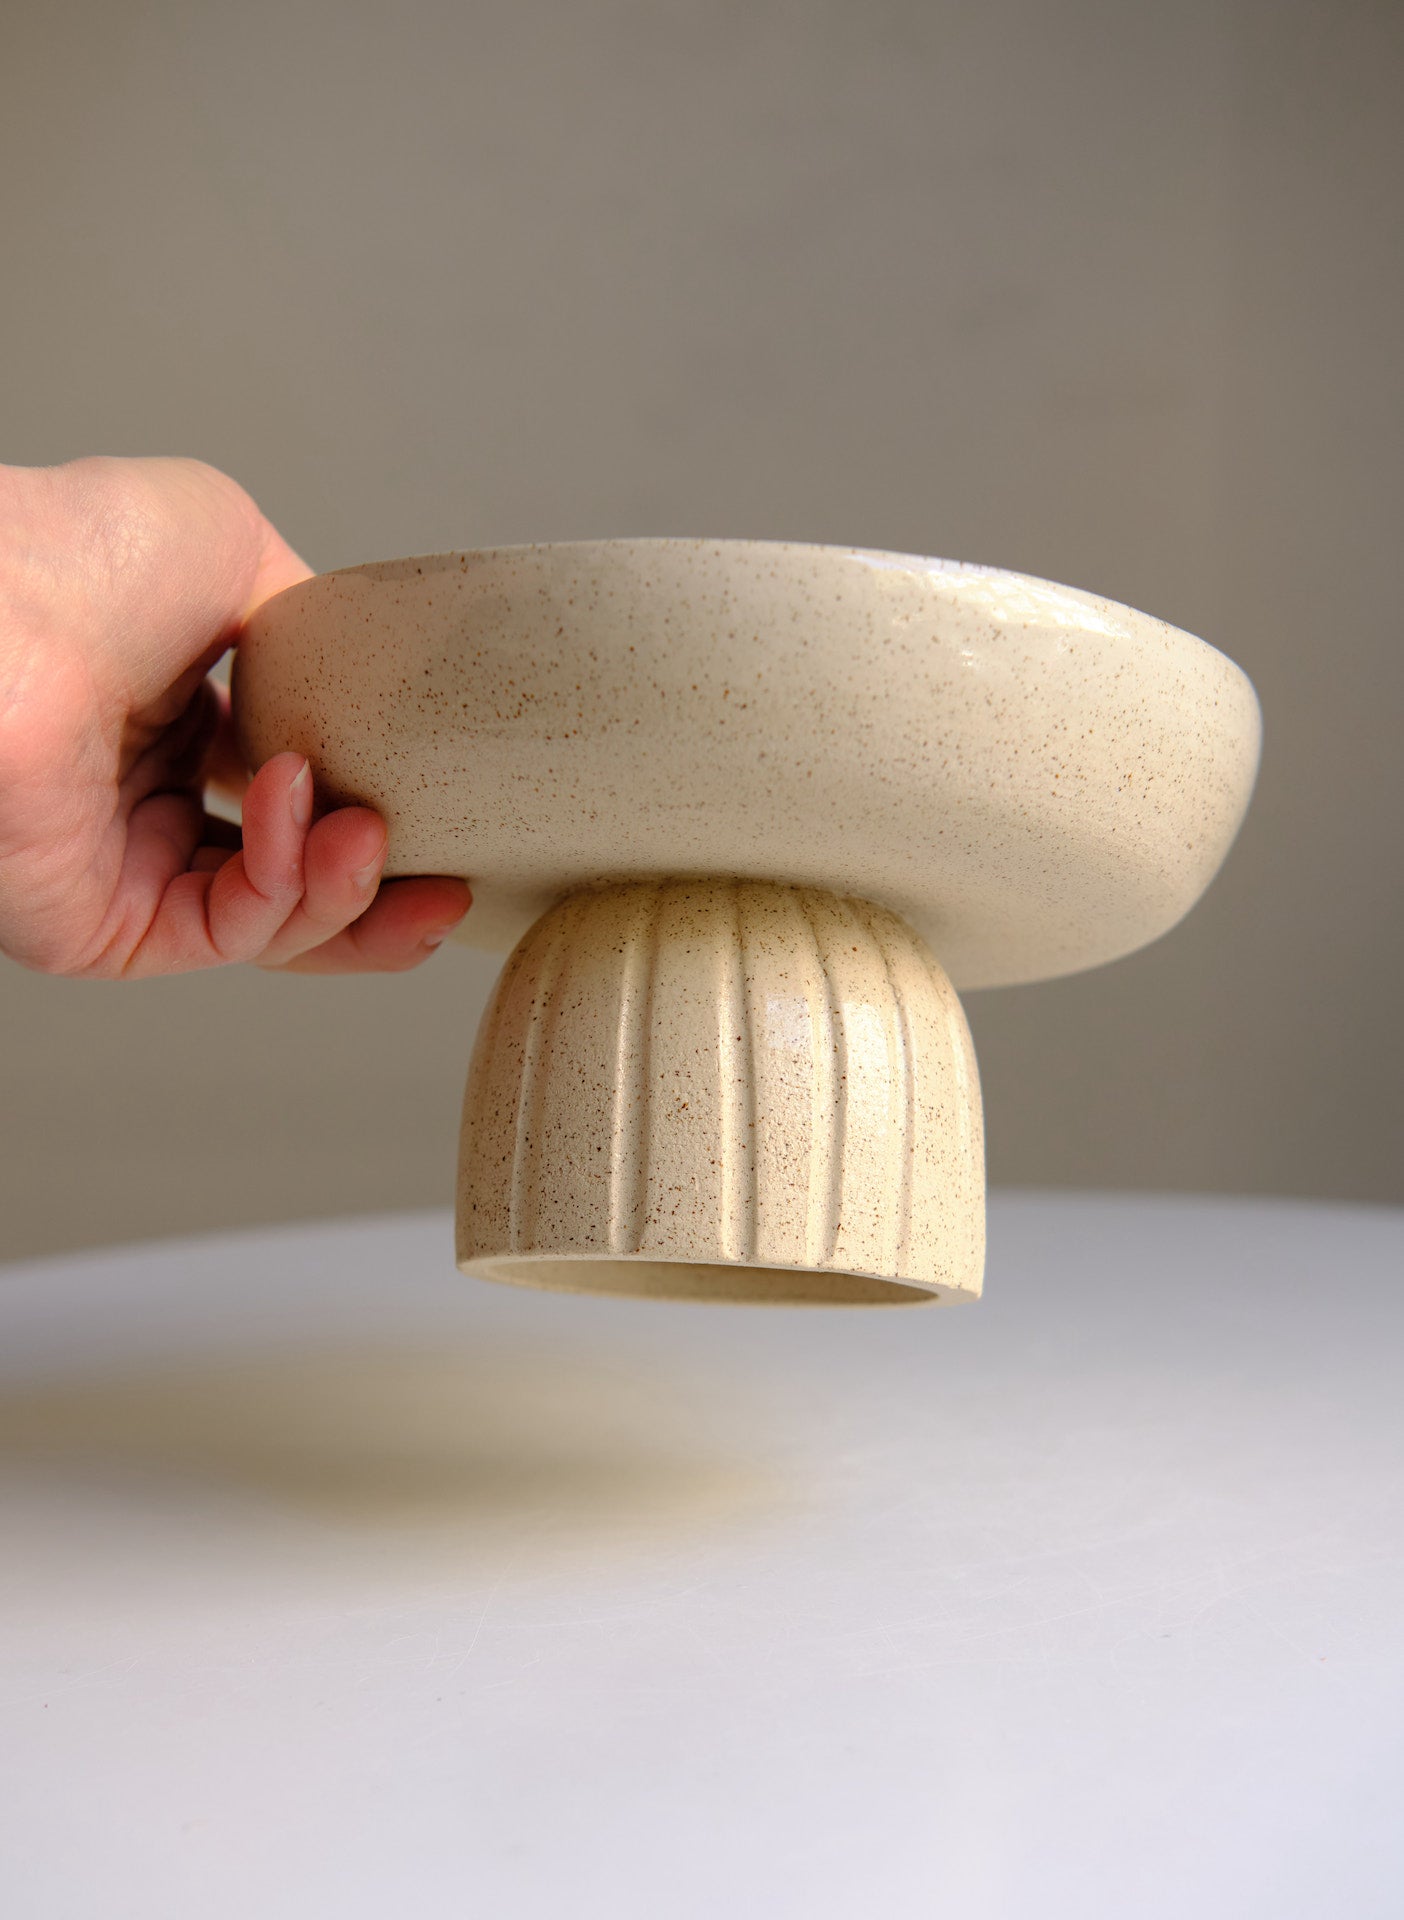 Pedestal bowl no. 3